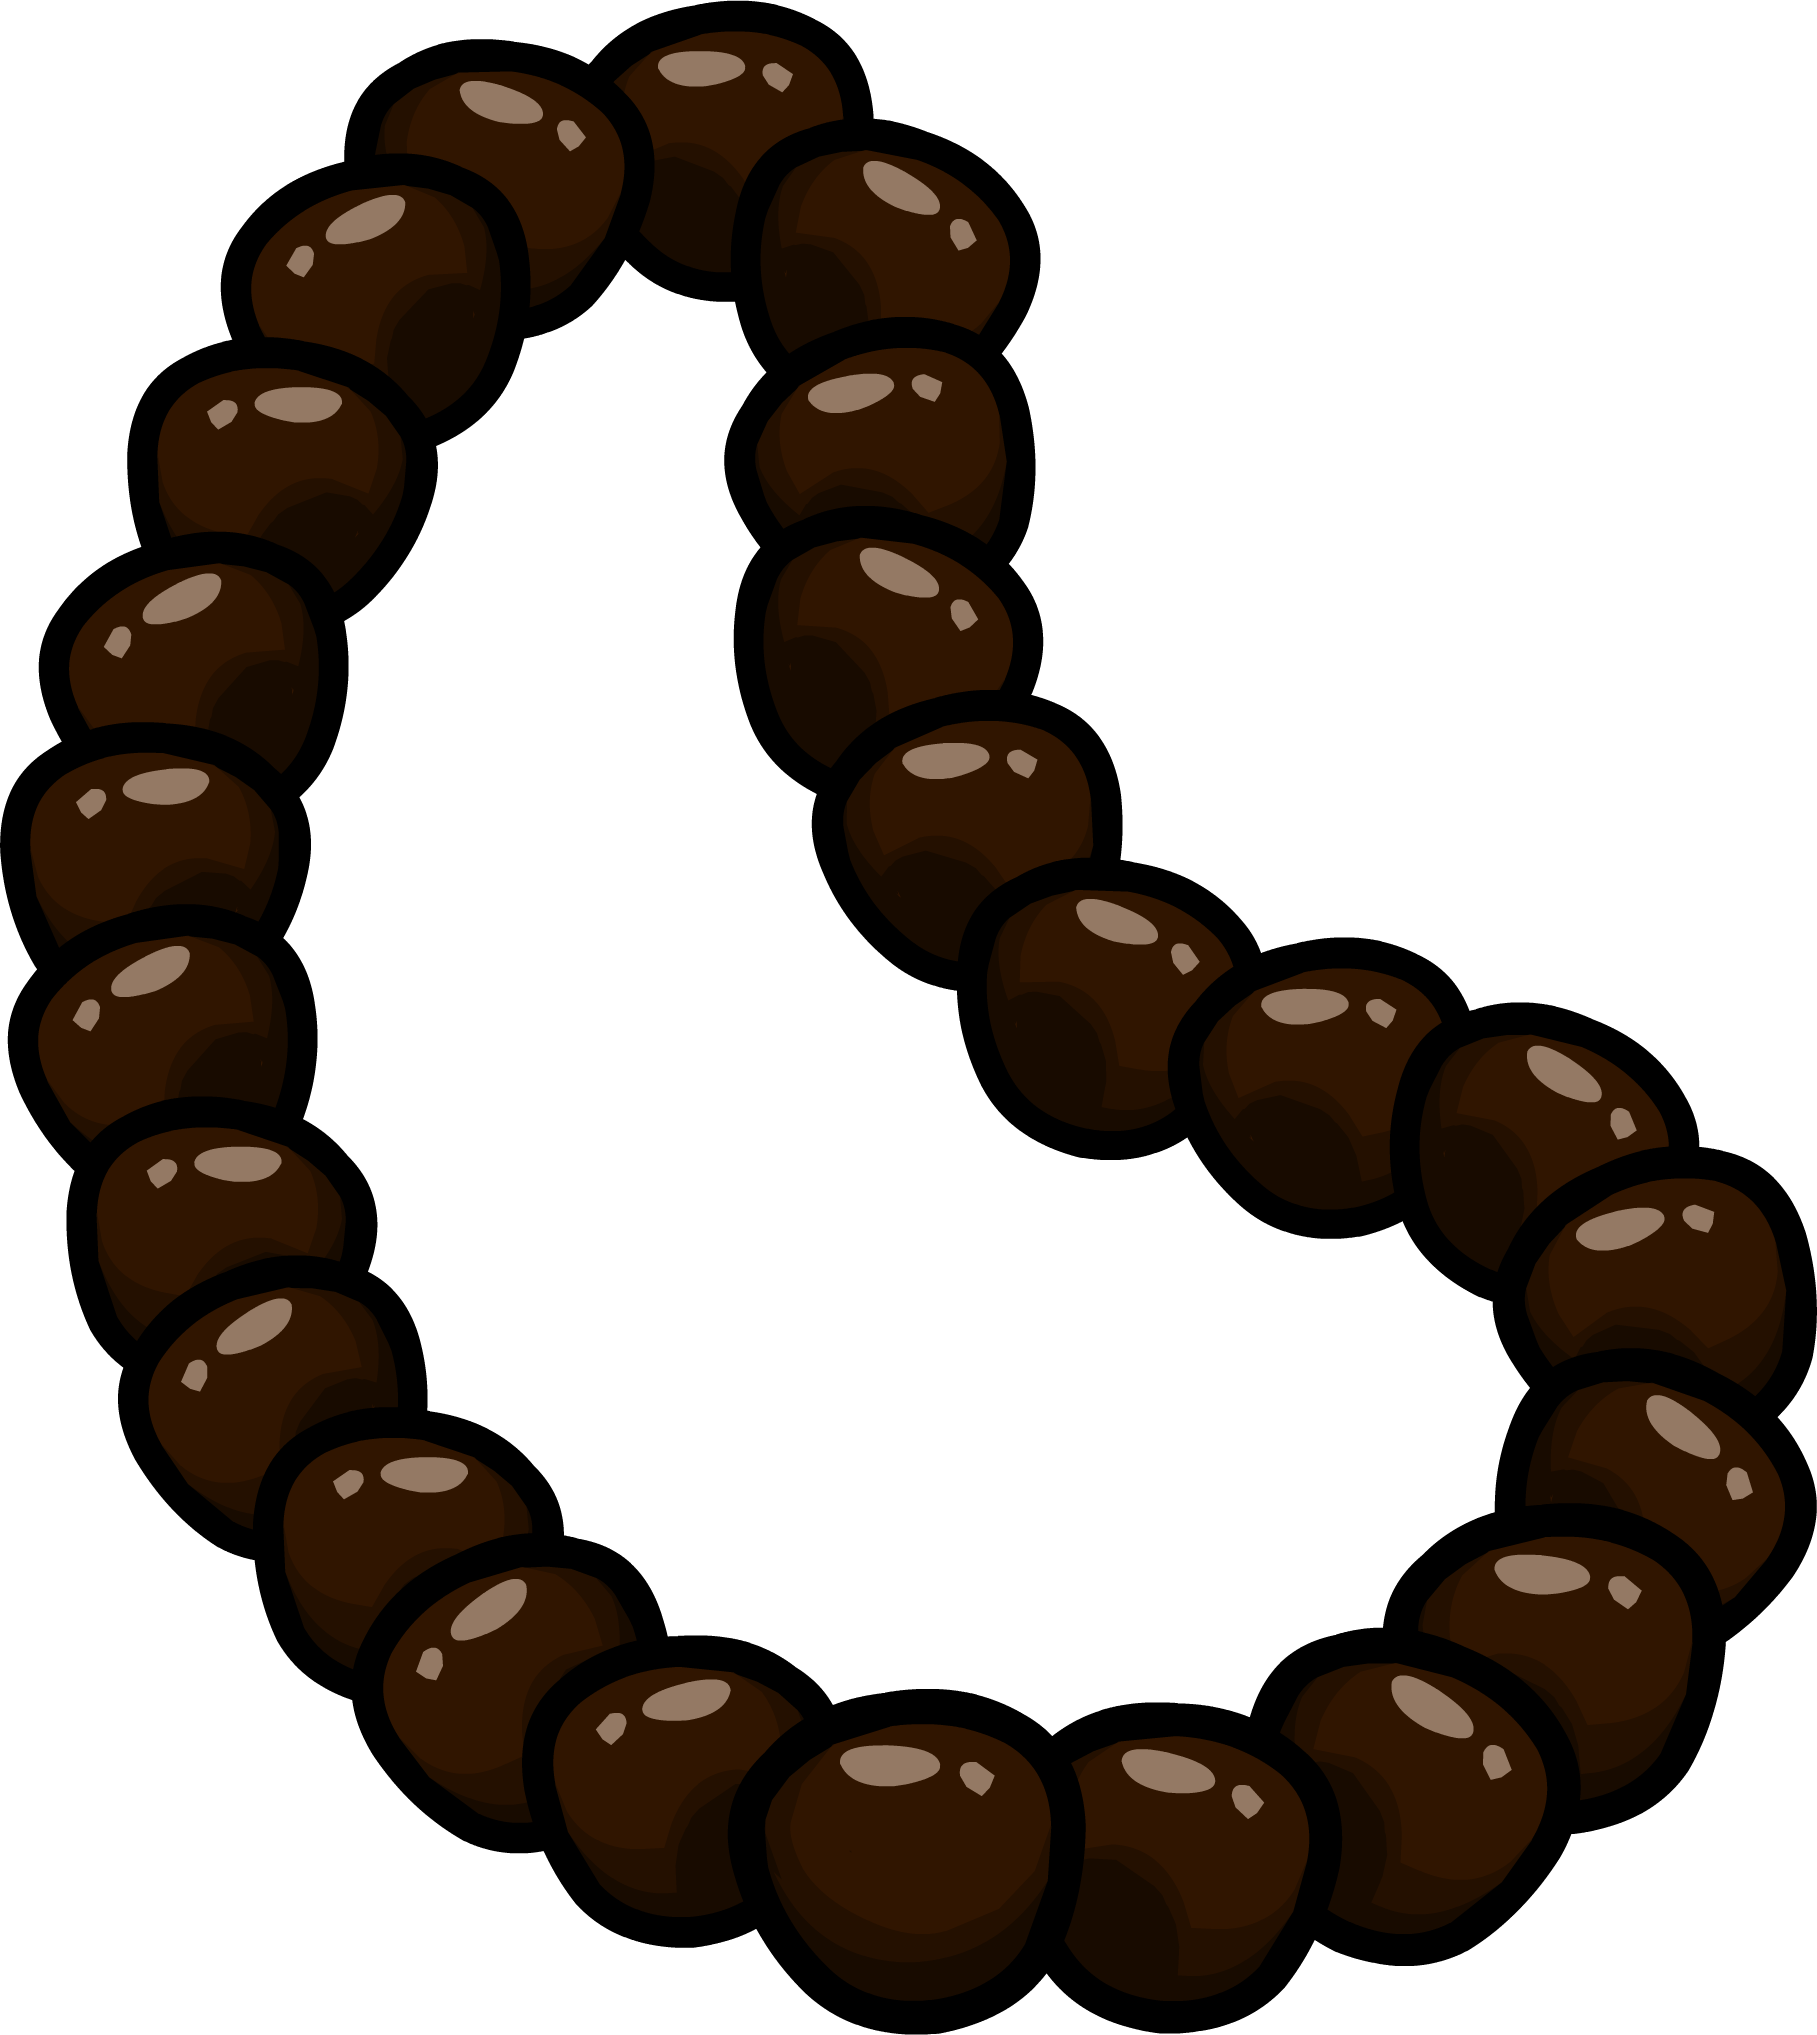 Kukui Nut Necklace - Kukui Nut Necklace (1817x2035)